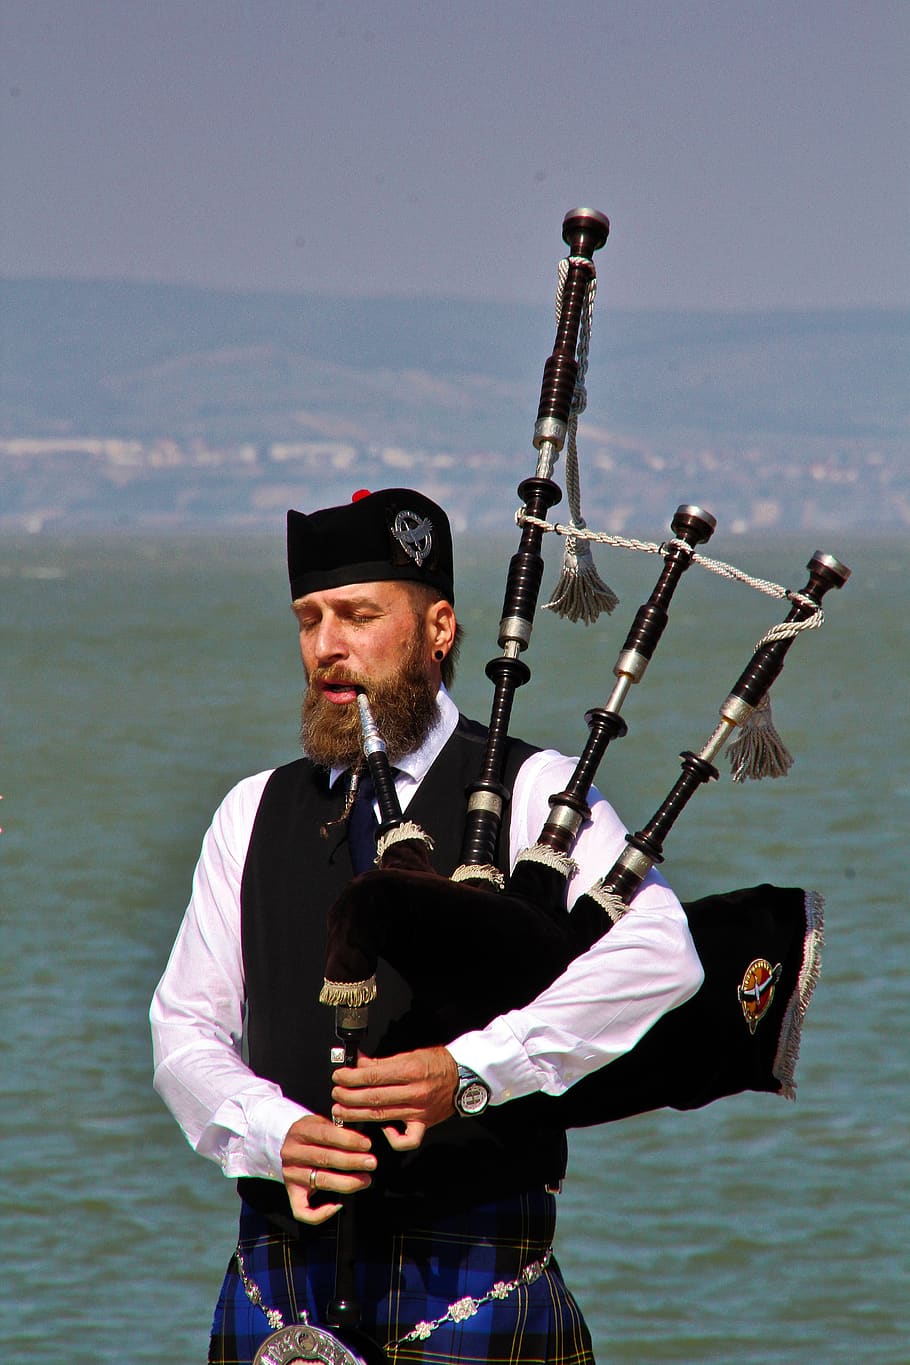 bagpipes, bagpiper, music, kilt, checkered, jock, scotland, folk music, tradition, culture